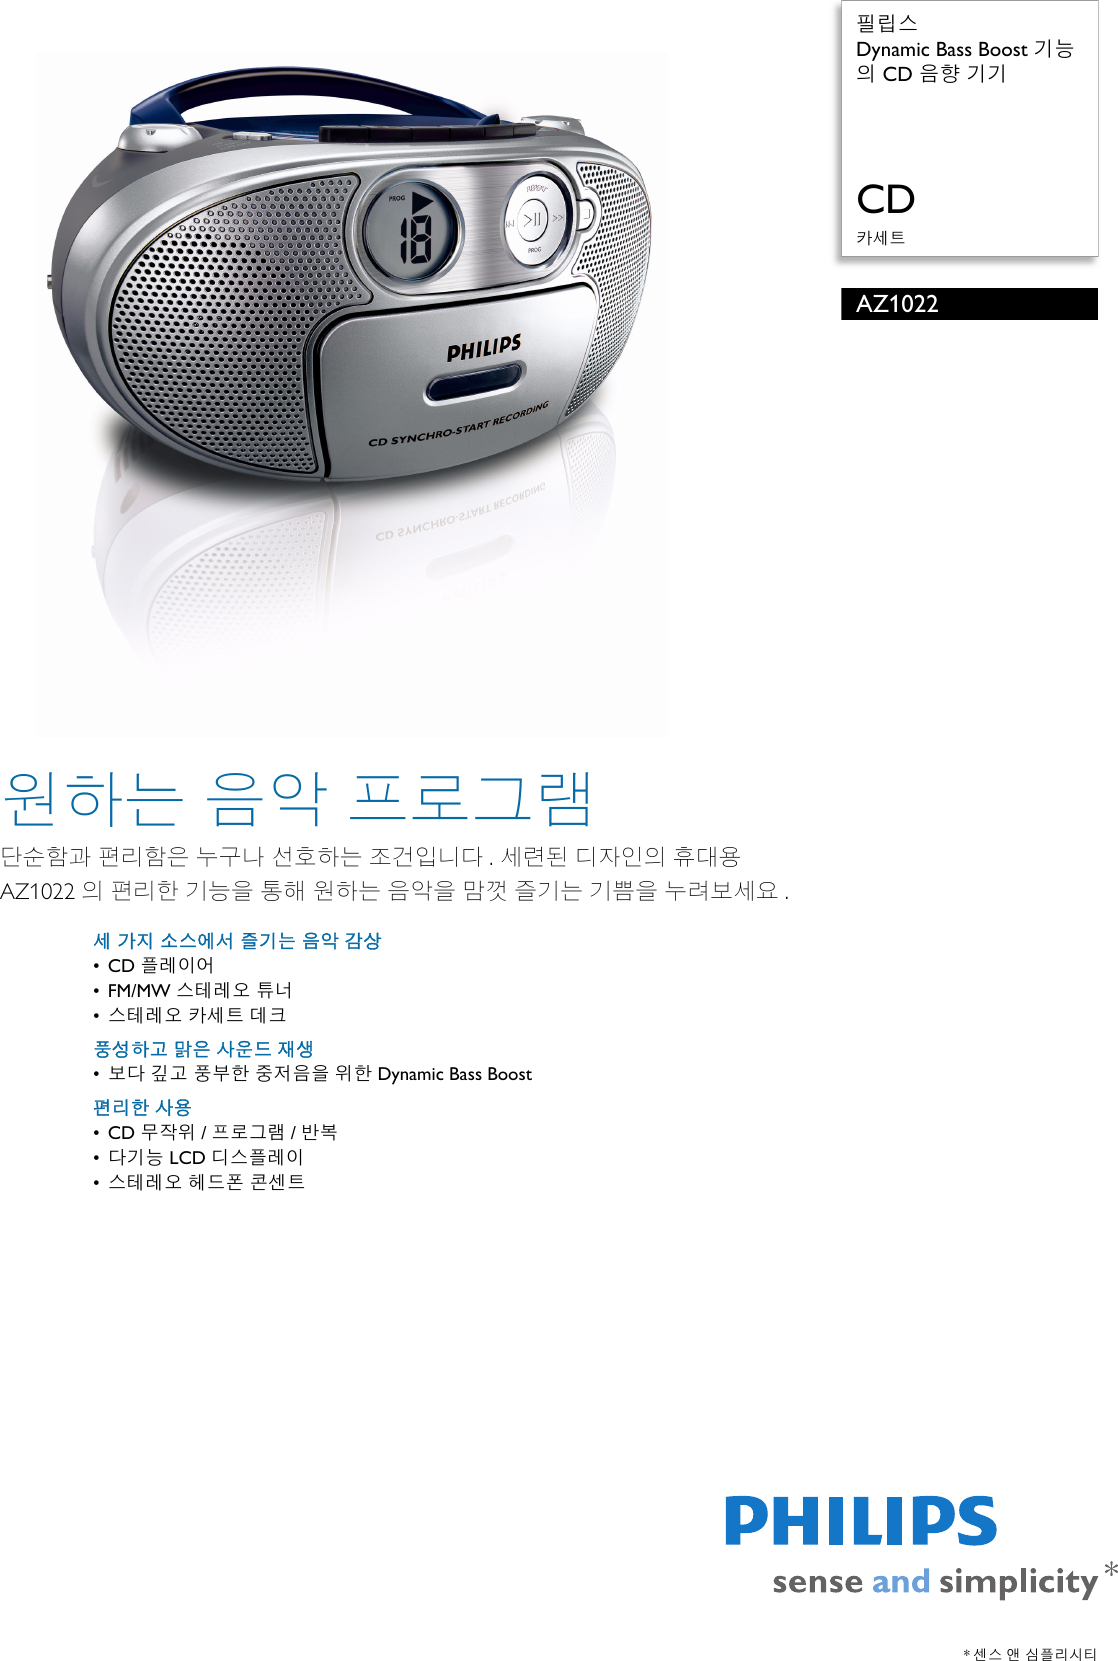 Philips Az1022 61 Dynamic Bass Boost 기능의 Cd 음향 기기 User Manual 팜플렛 Az1022 61 Pss Korkr